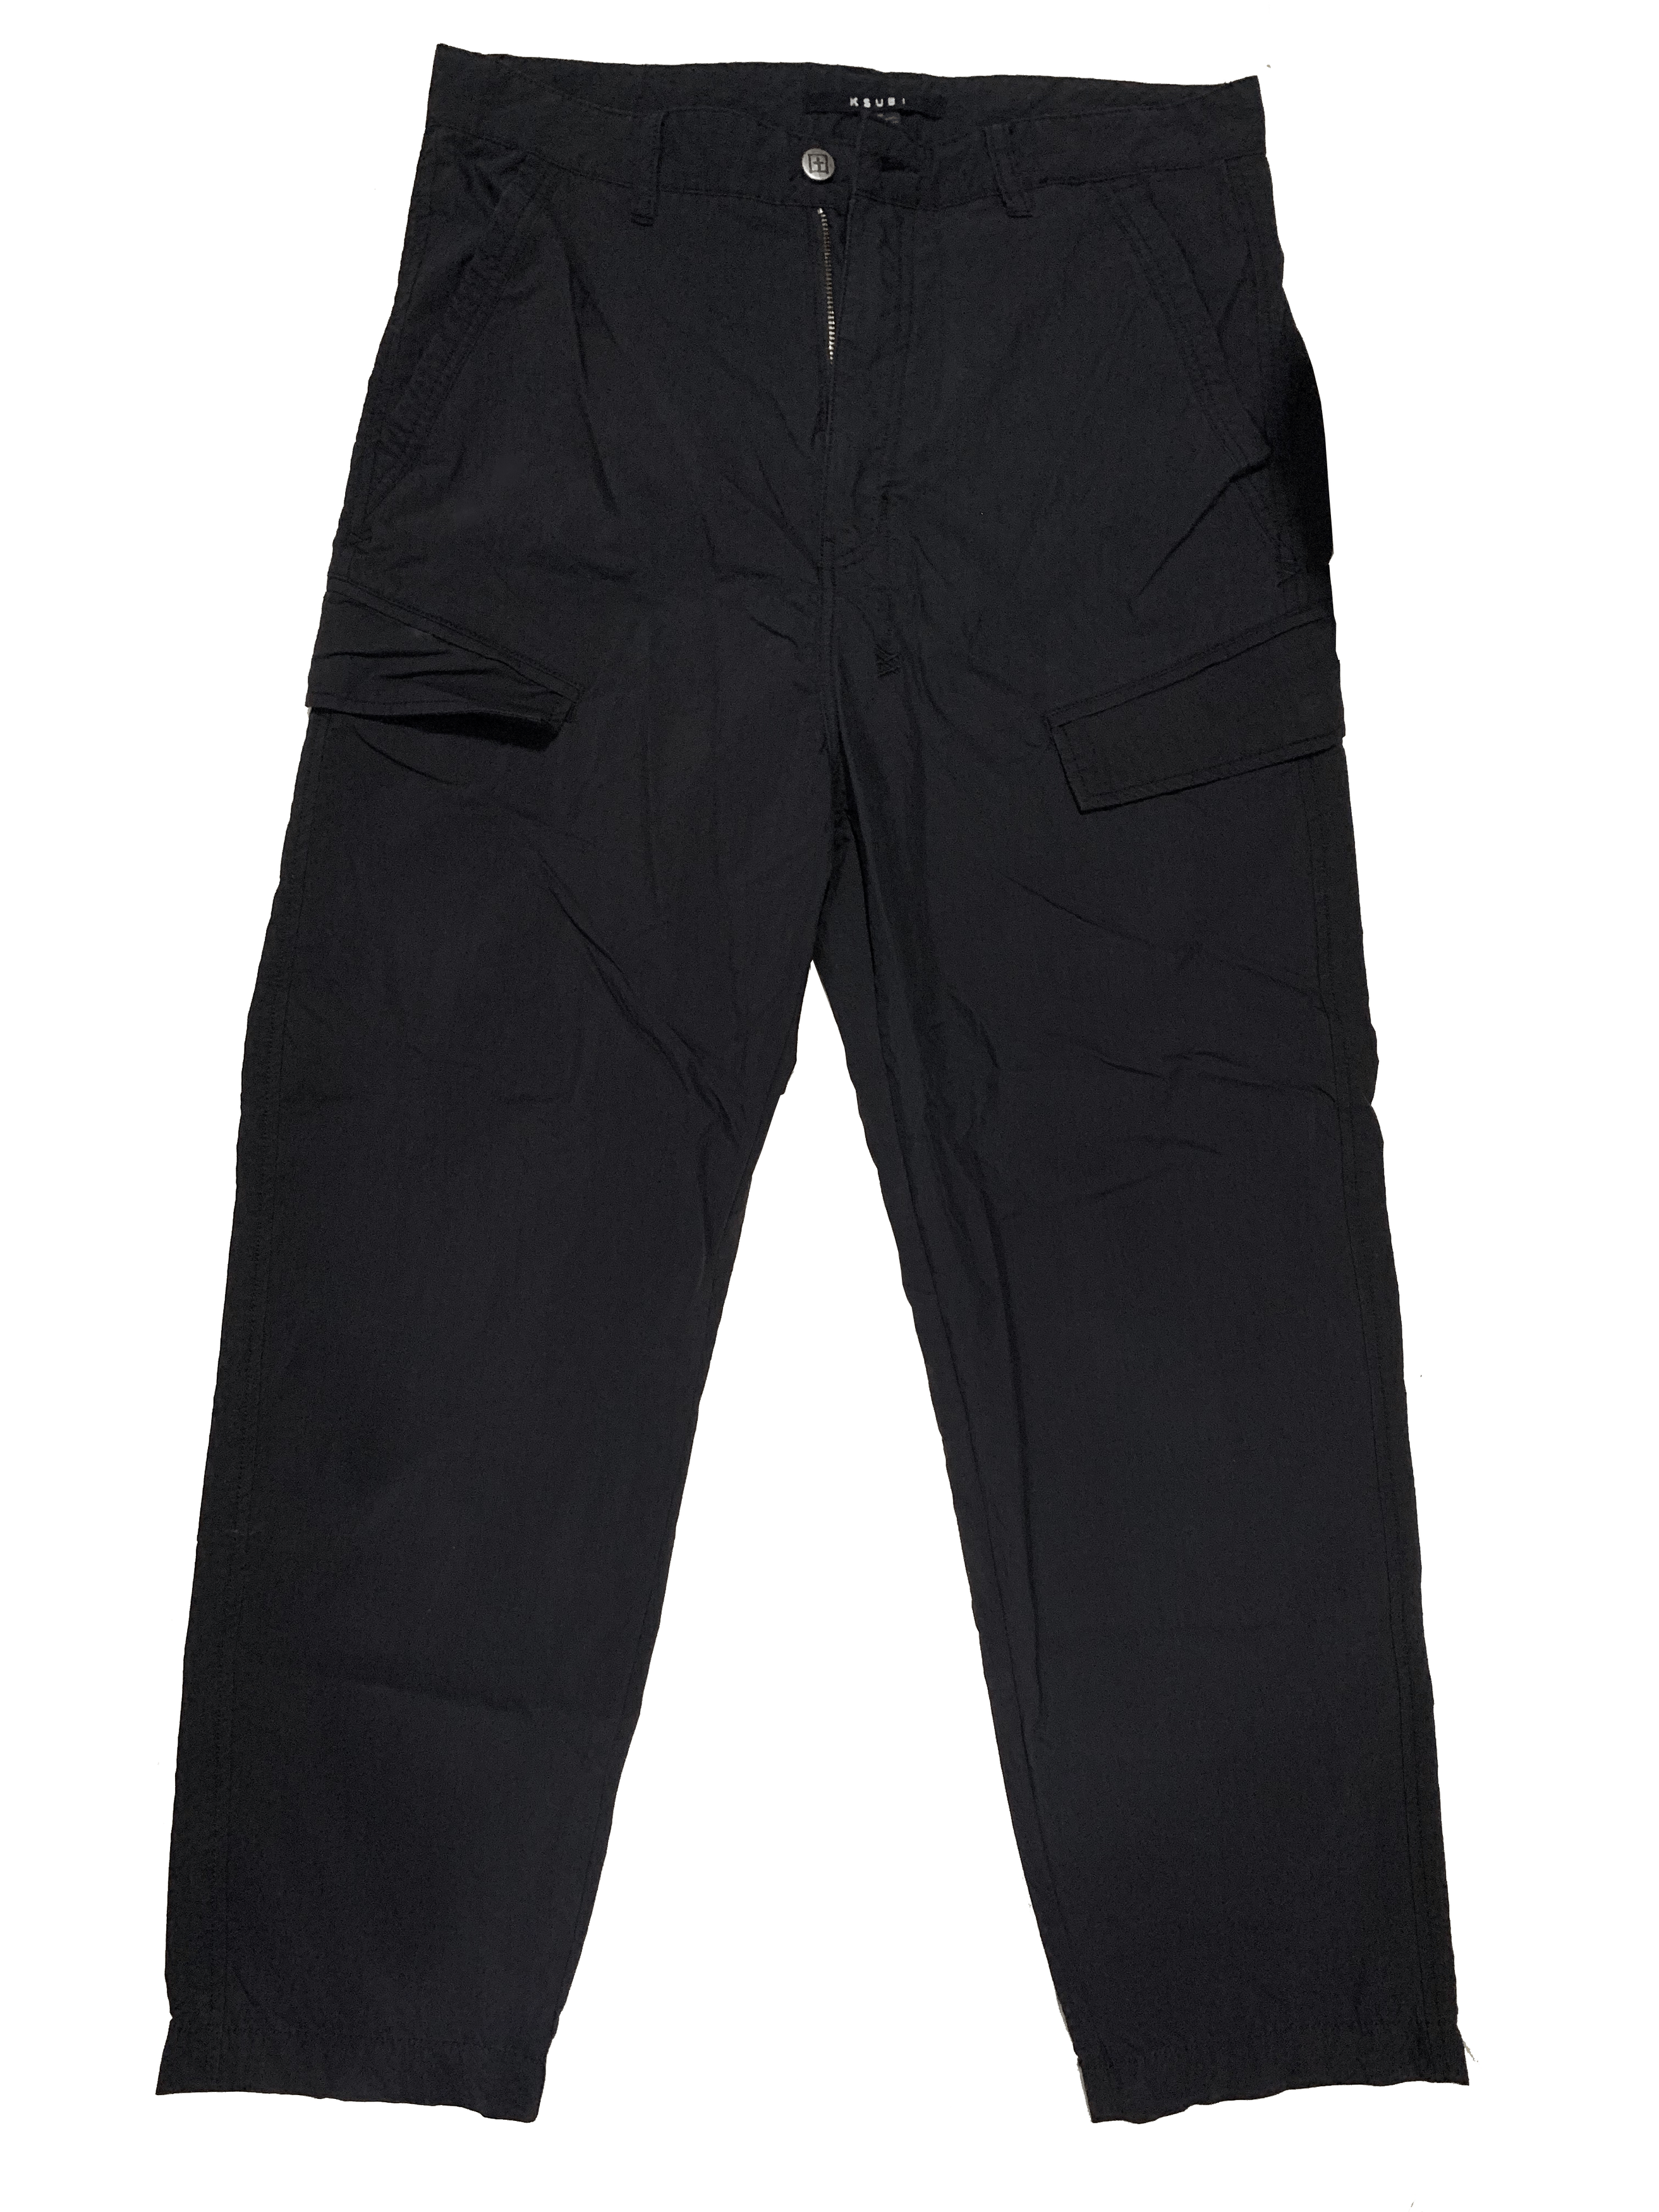 Ksubi Ksubi cargo pants | Grailed